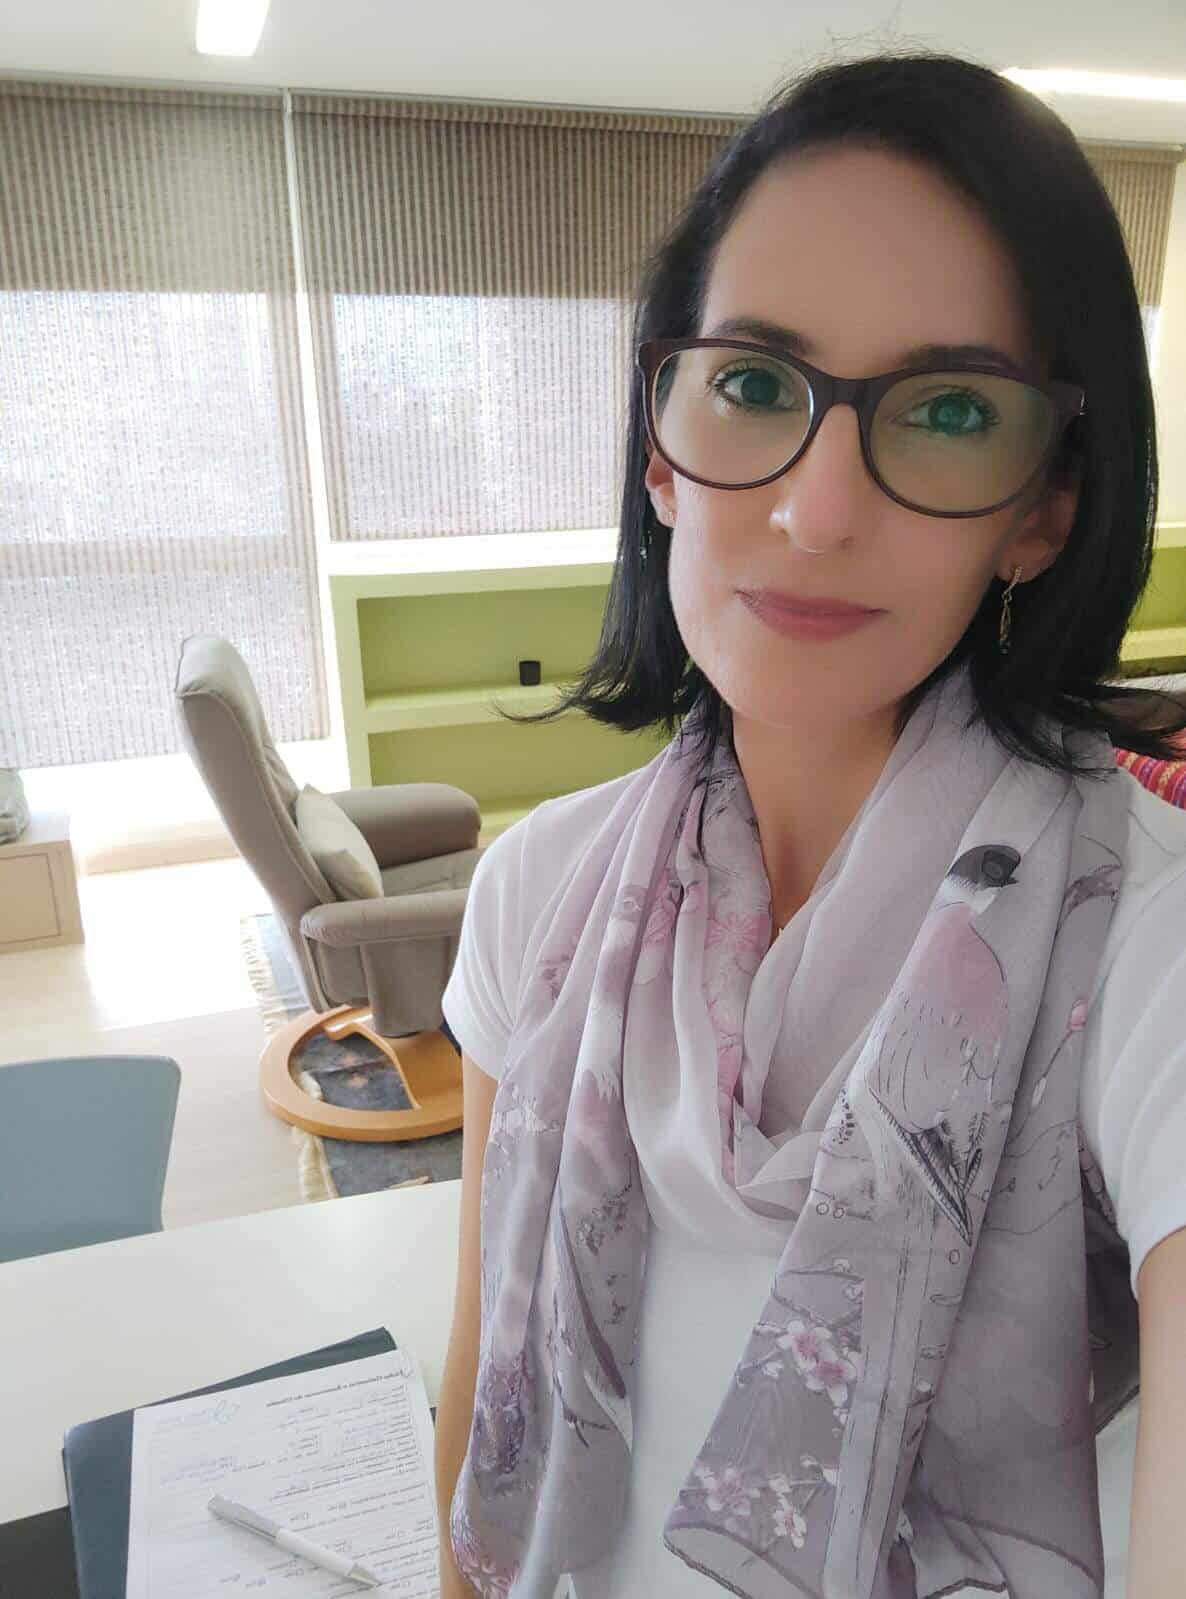 Terapeuta especialista no tratamento e terapia para compulsão alimentar em Brasília, D.F. - Kelly Vieira - Hipnoterapeuta especialista em compulsão alimentar